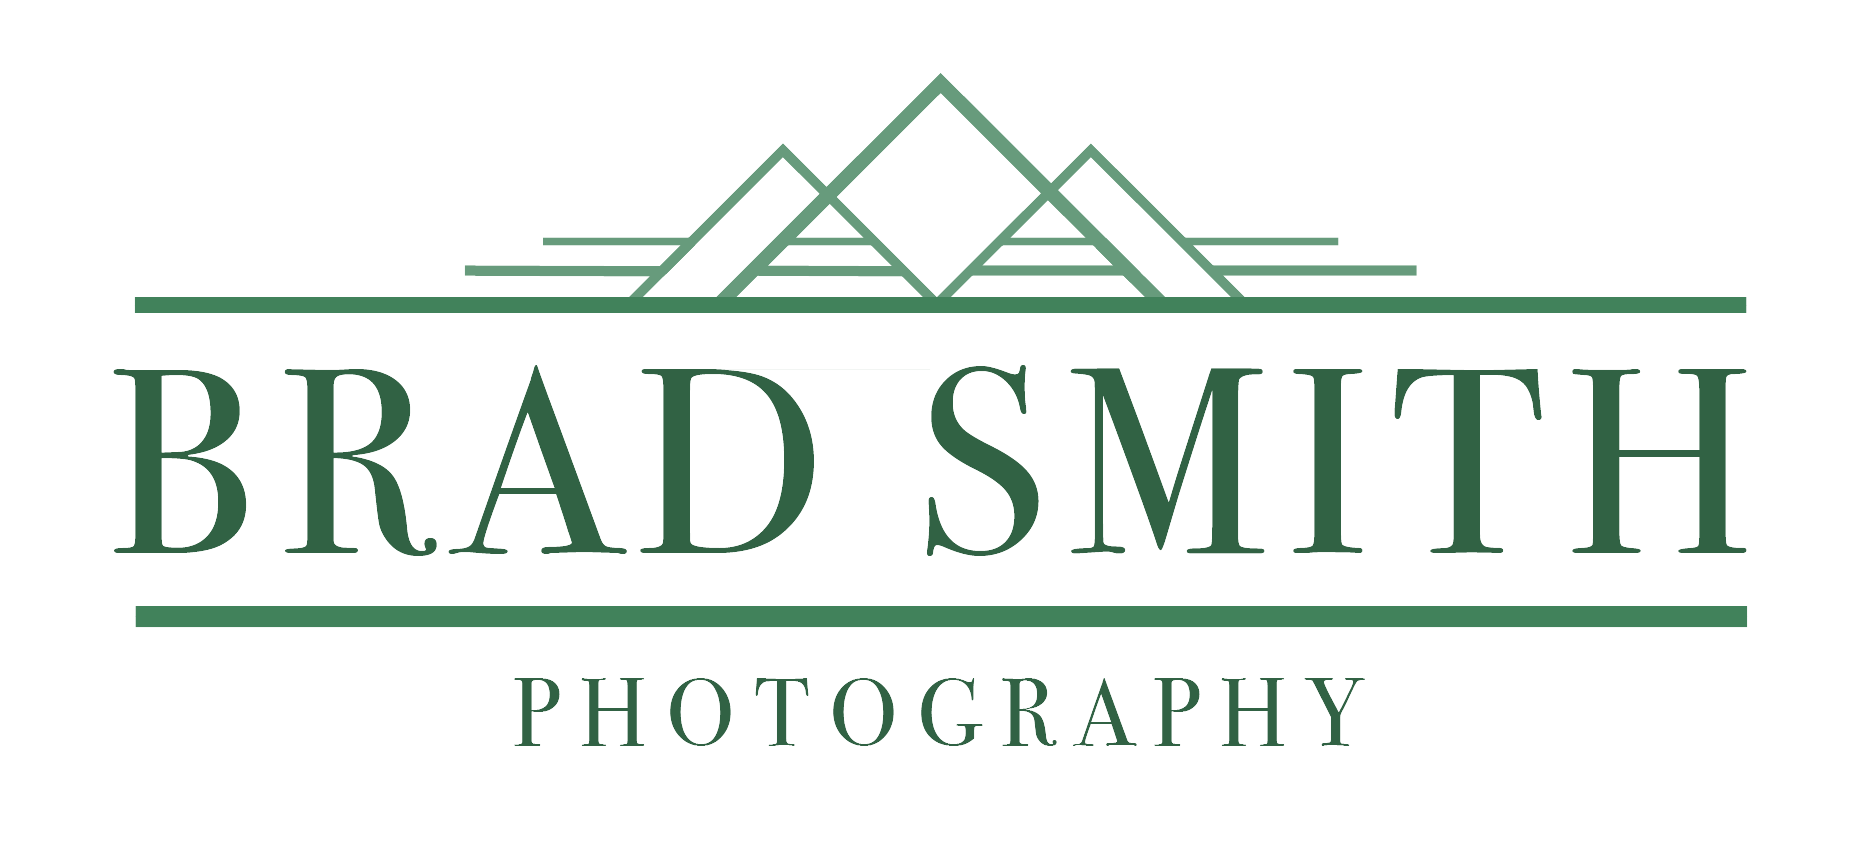 Brad Smith photography